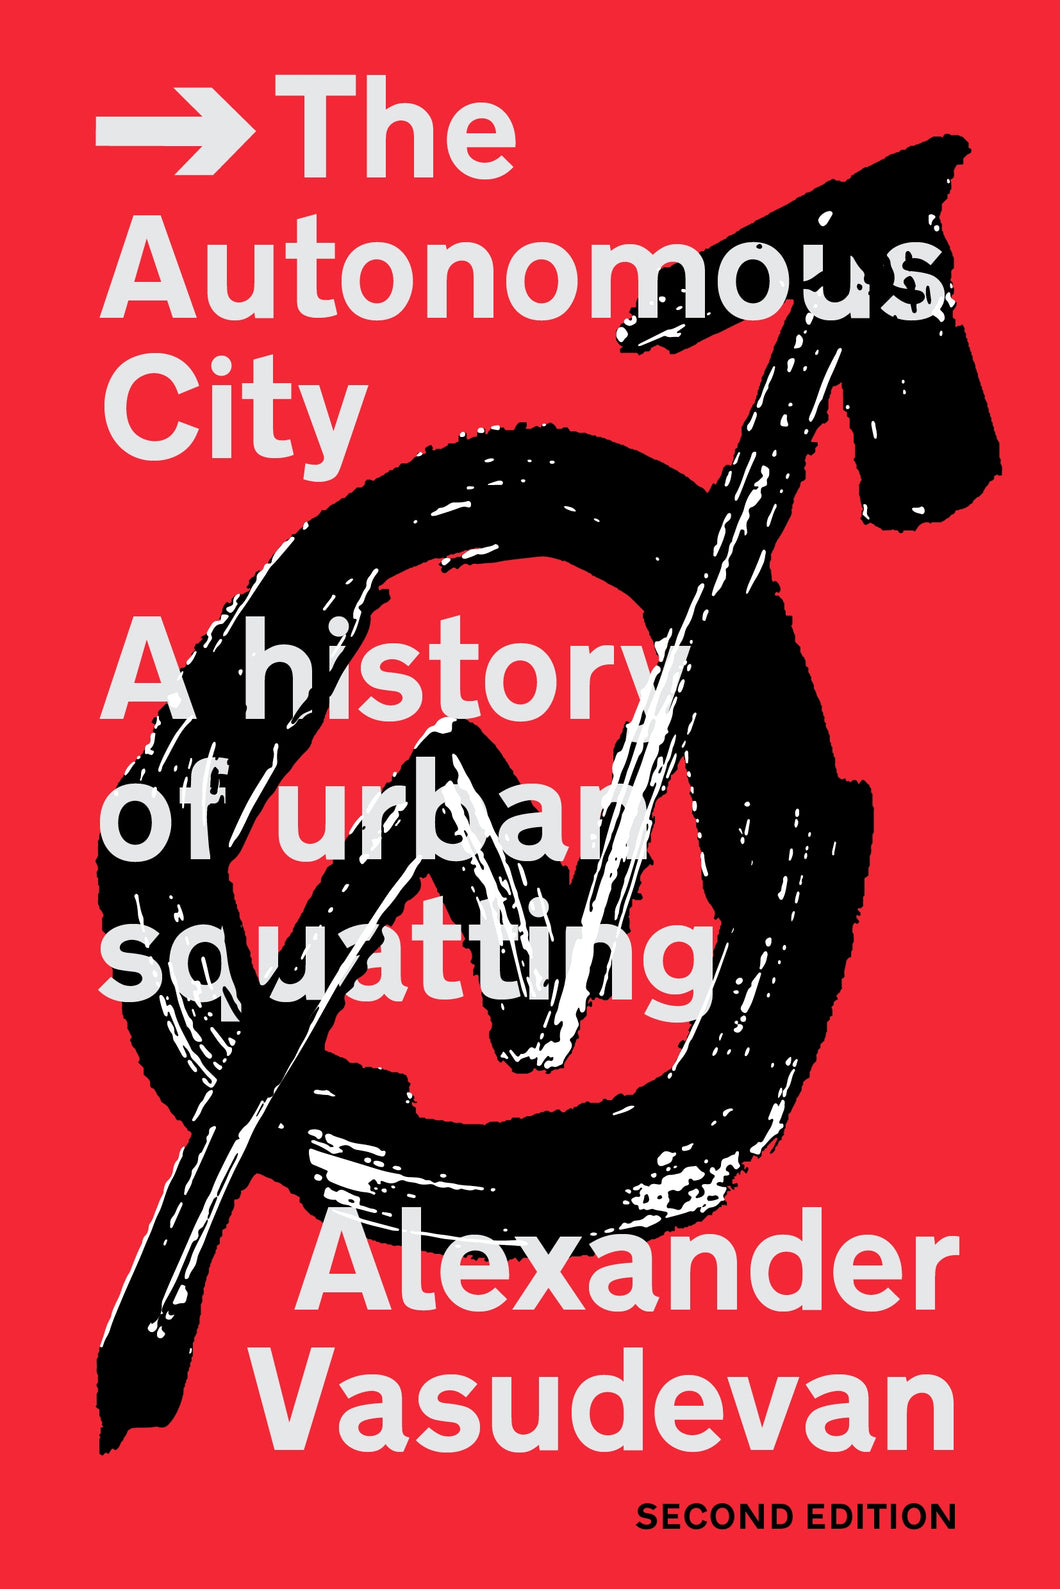 The Autonomous City : A History of Urban Squatting ร้านหนังสือและสิ่งของ เป็นร้านหนังสือภาษาอังกฤษหายาก และร้านกาแฟ หรือ บุ๊คคาเฟ่ ตั้งอยู่สุขุมวิท กรุงเทพ